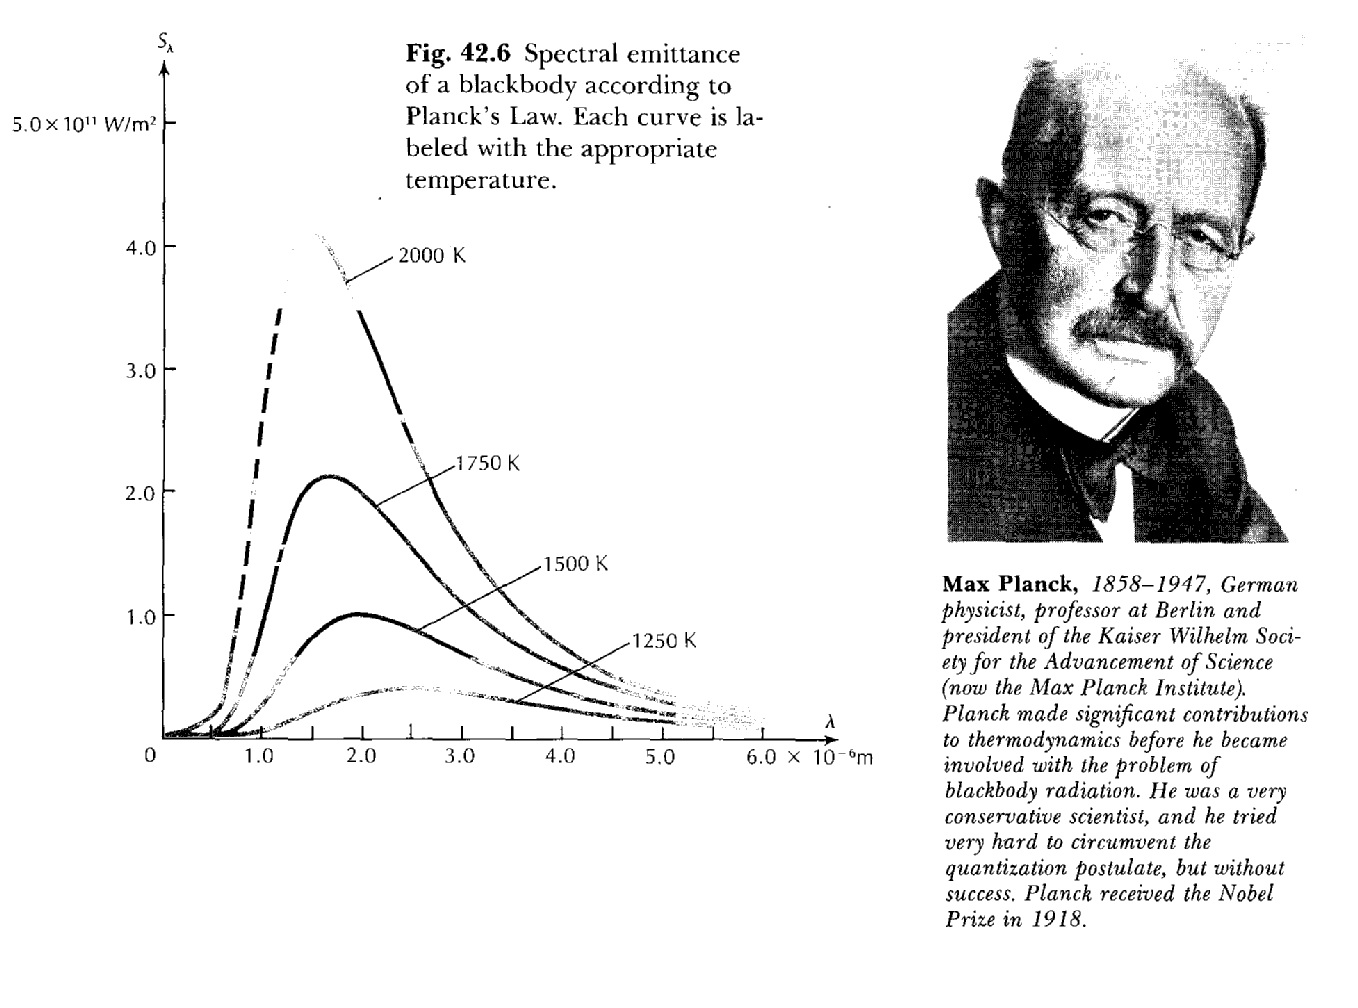 H. C. Ohanian, Physics - 2nd ed. London W.W. Norton & co., 1989.